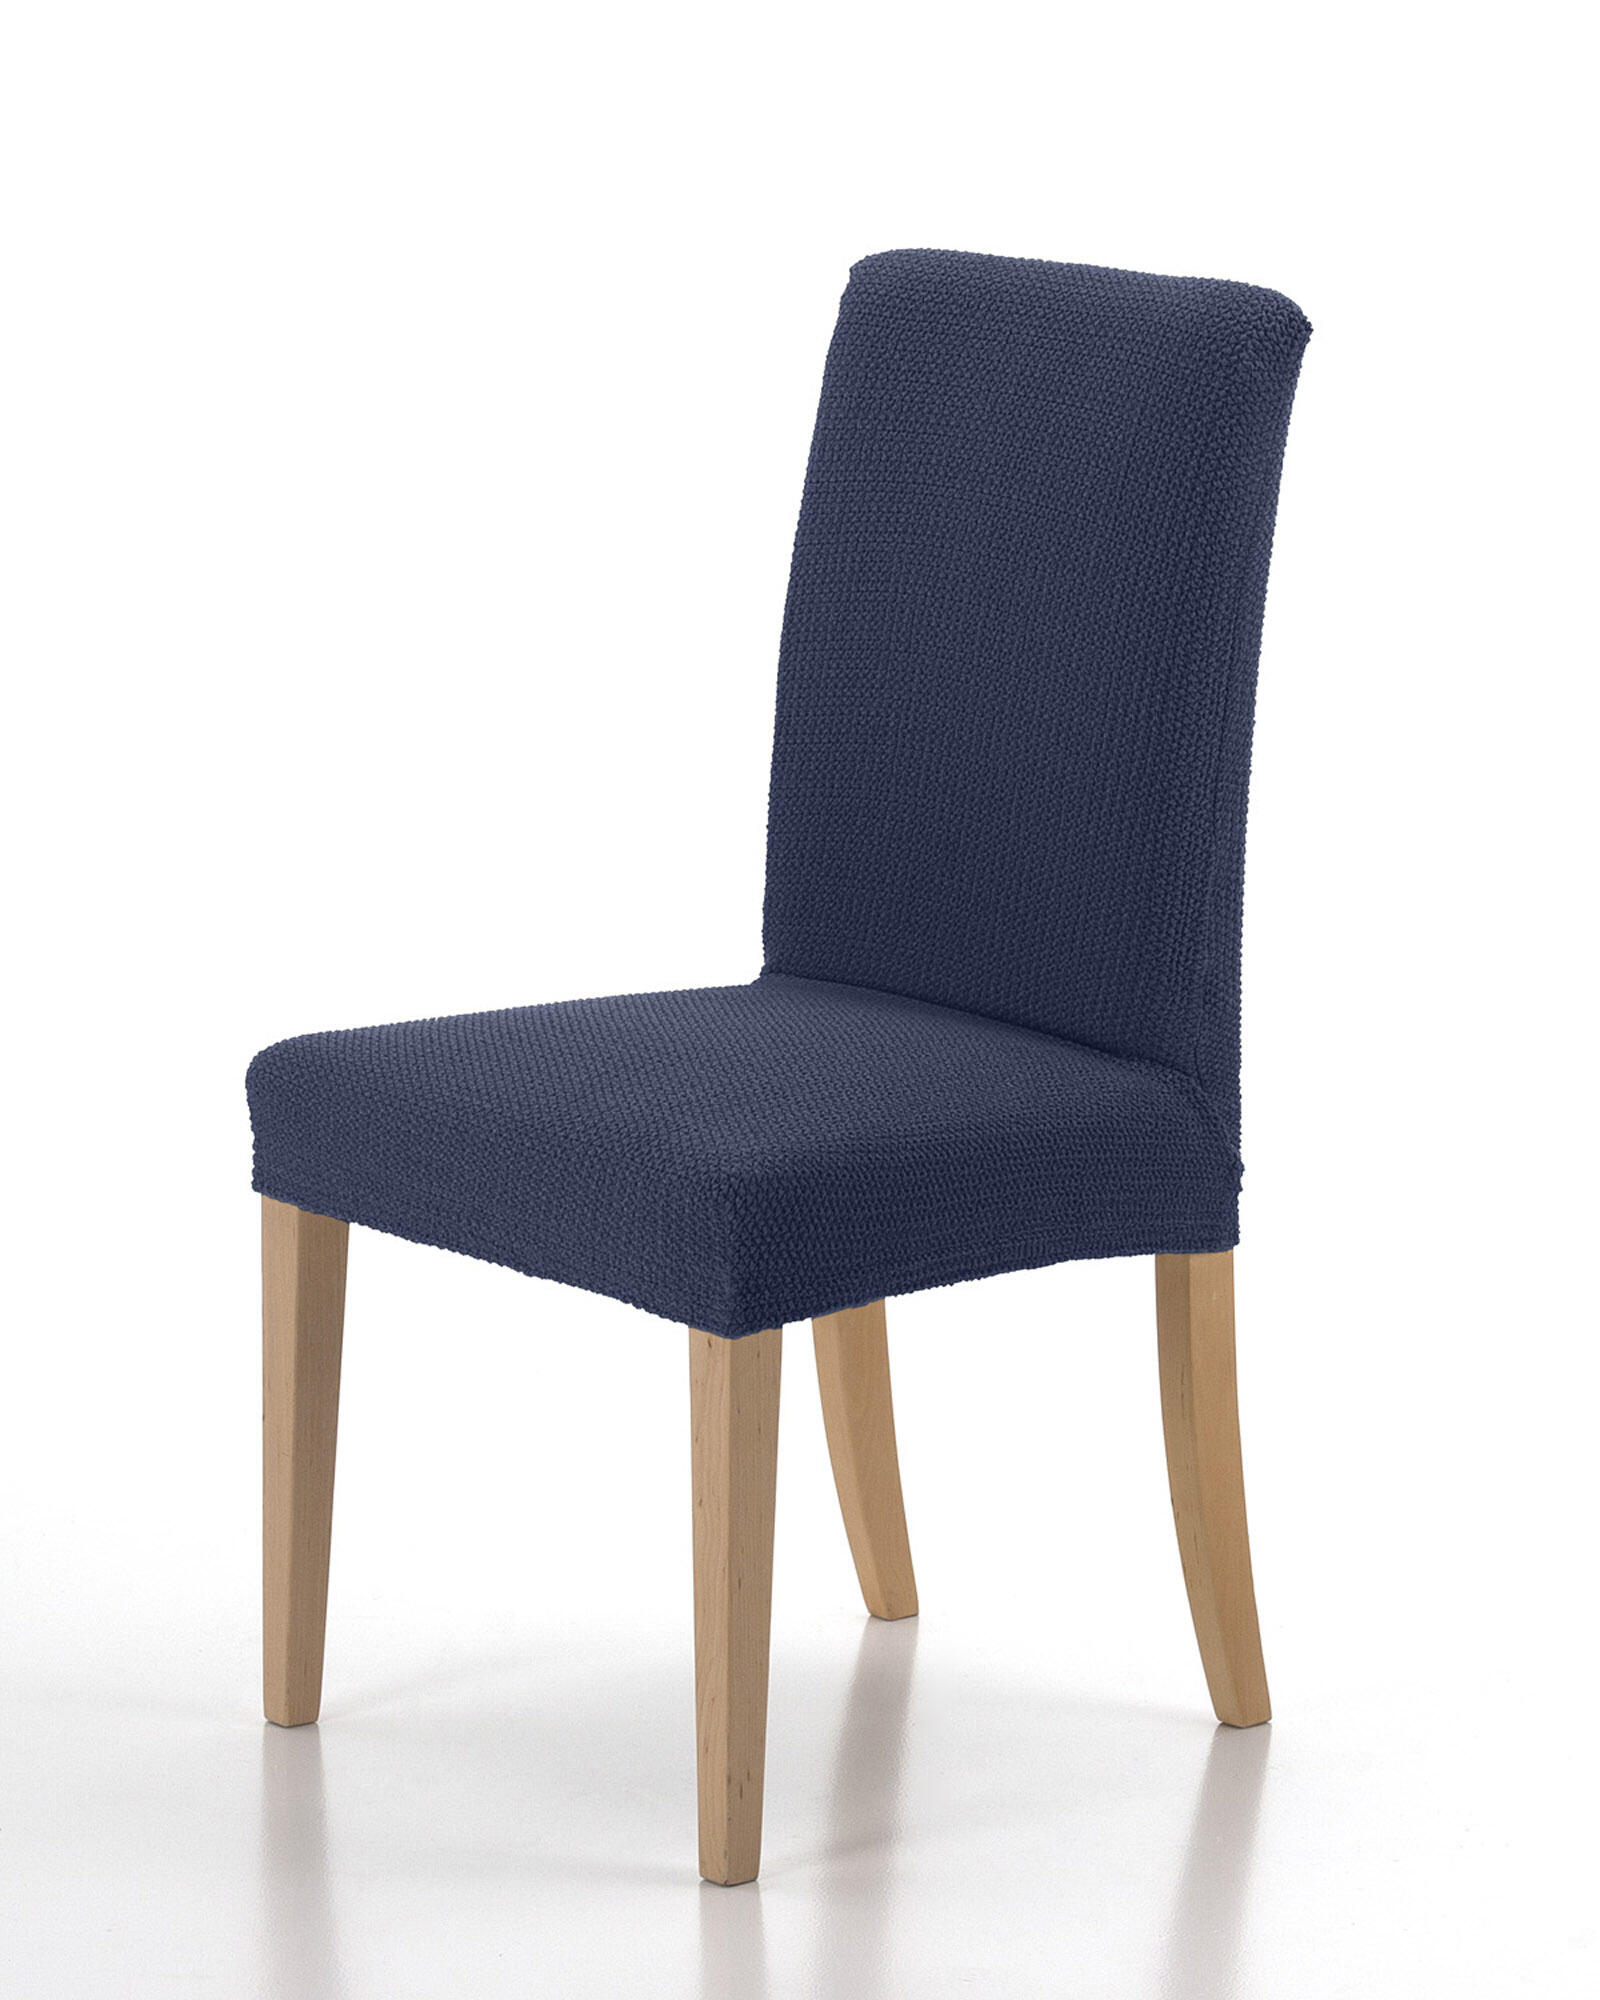 Funda elástica silla edir azul pack 2 resp. 50 cms